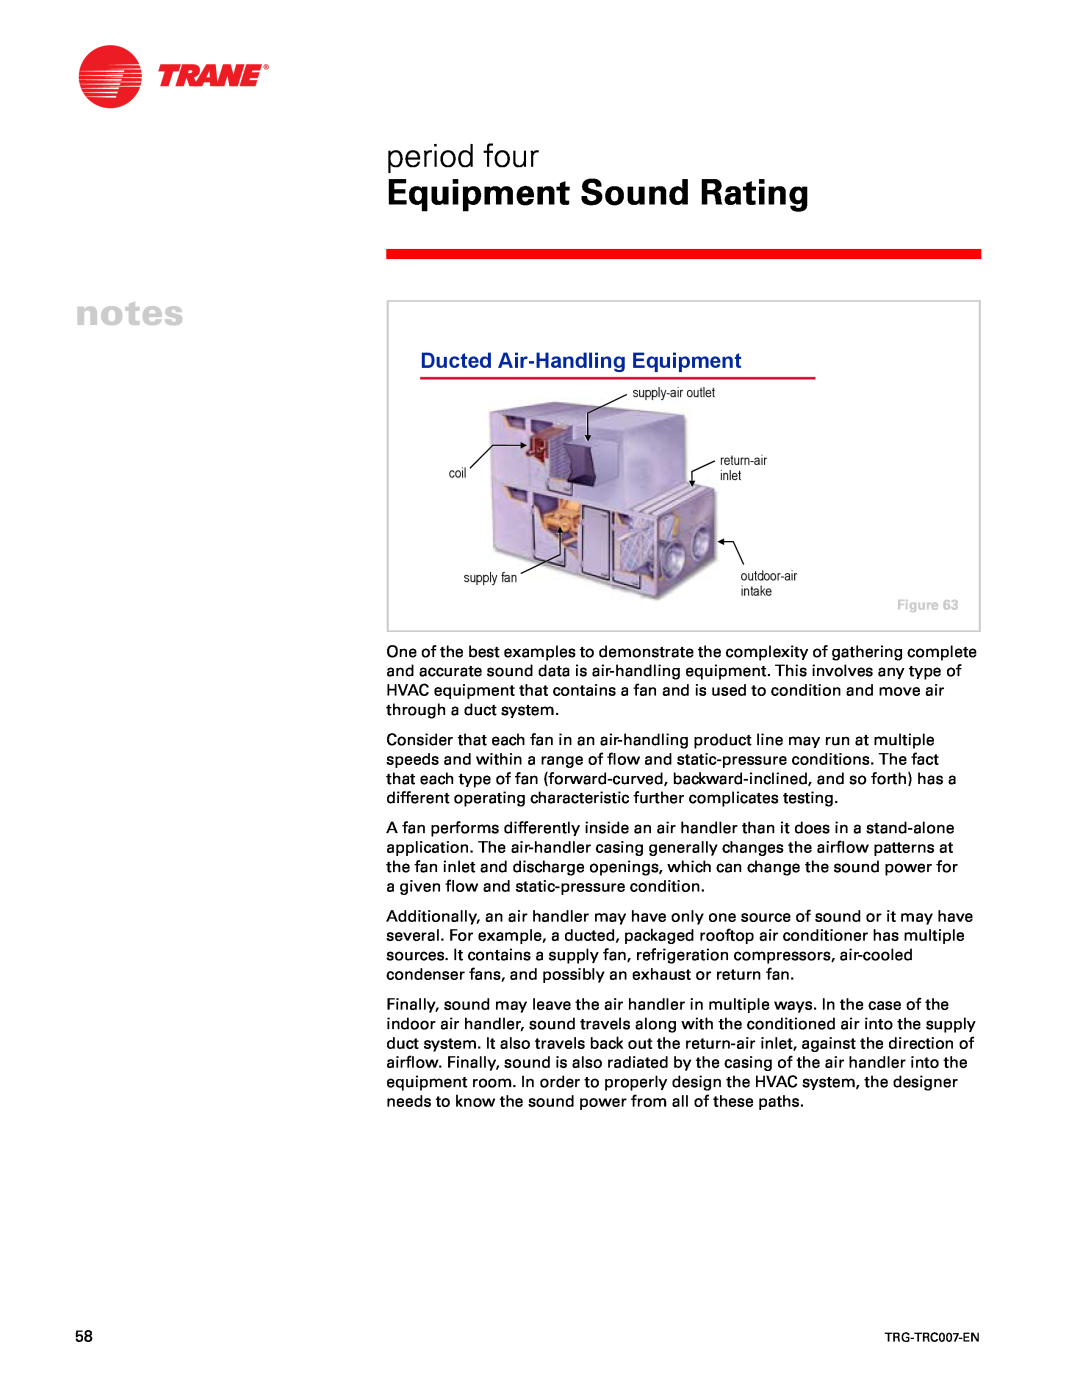 Trane TRG-TRC007-EN Ducted Air-HandlingEquipment, Equipment Sound Rating, period four, supply-airoutlet, coil, return-air 